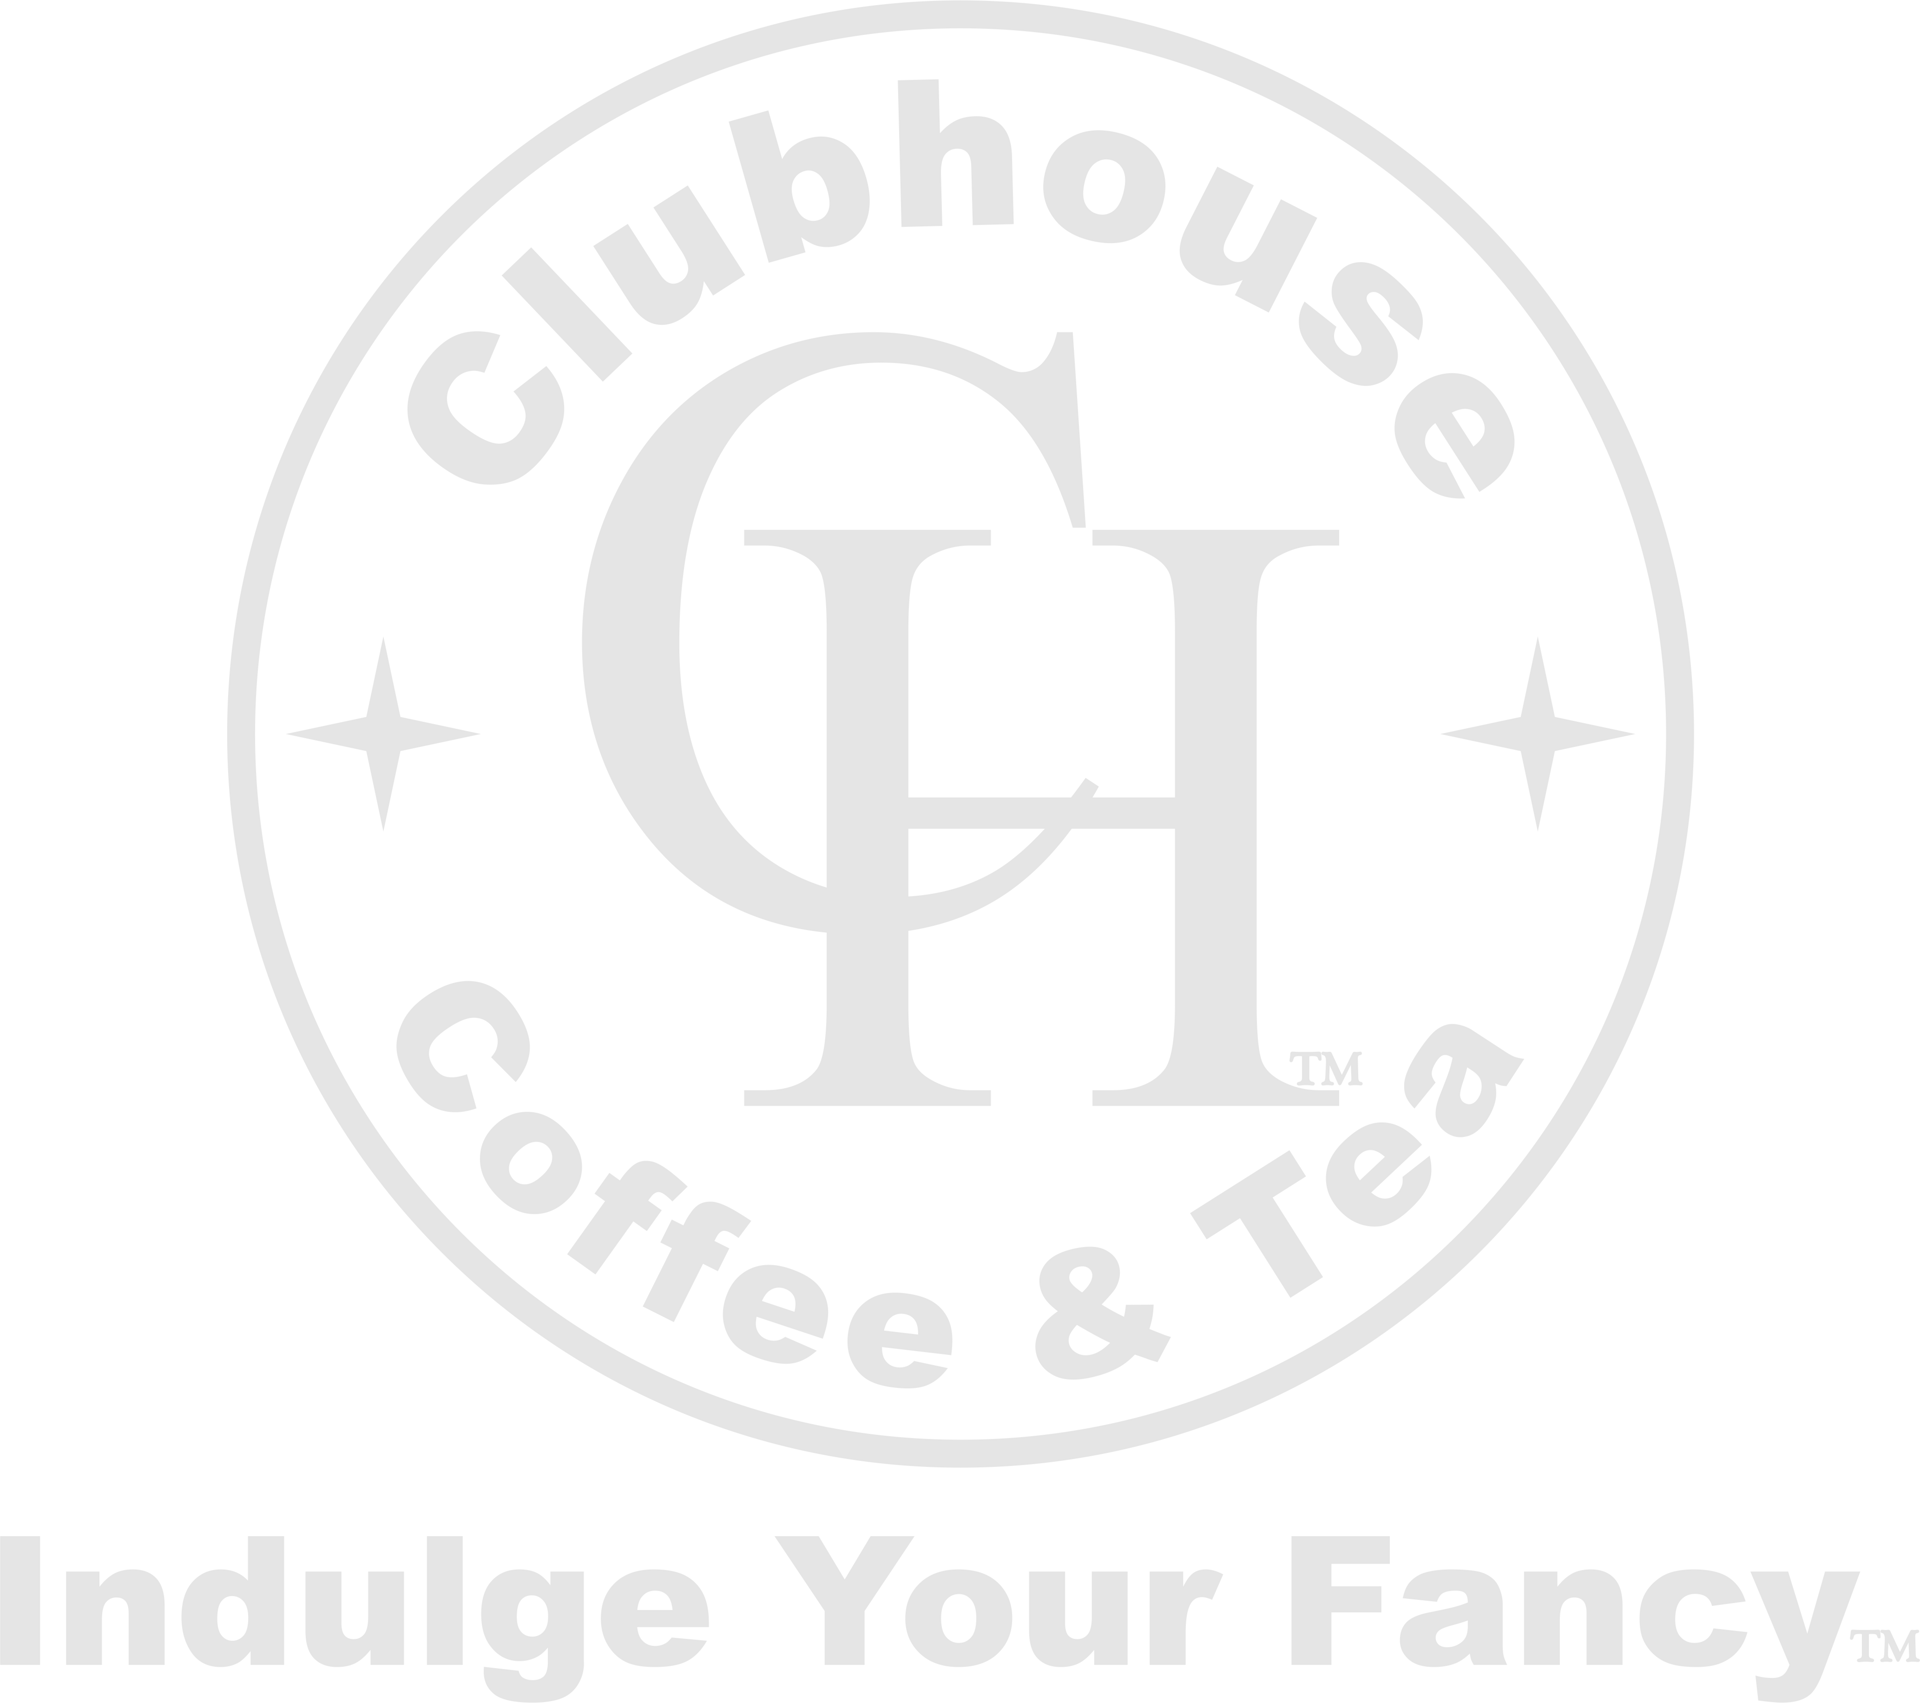 Club House Coffee and Tea